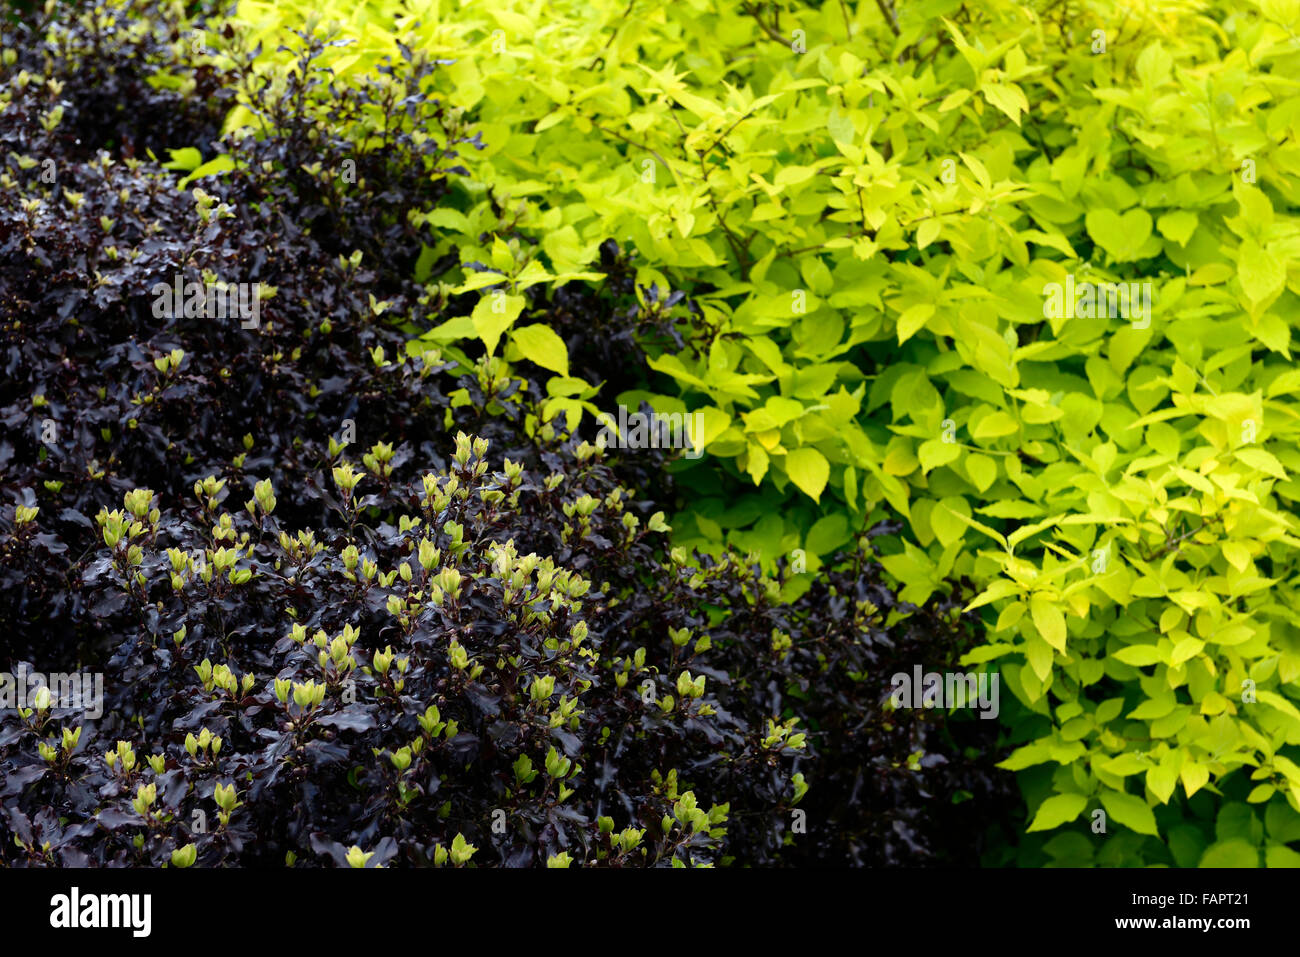 pittosporum shrub dark leaves leaf foliage green contrast contrasting RM Floral Stock Photo